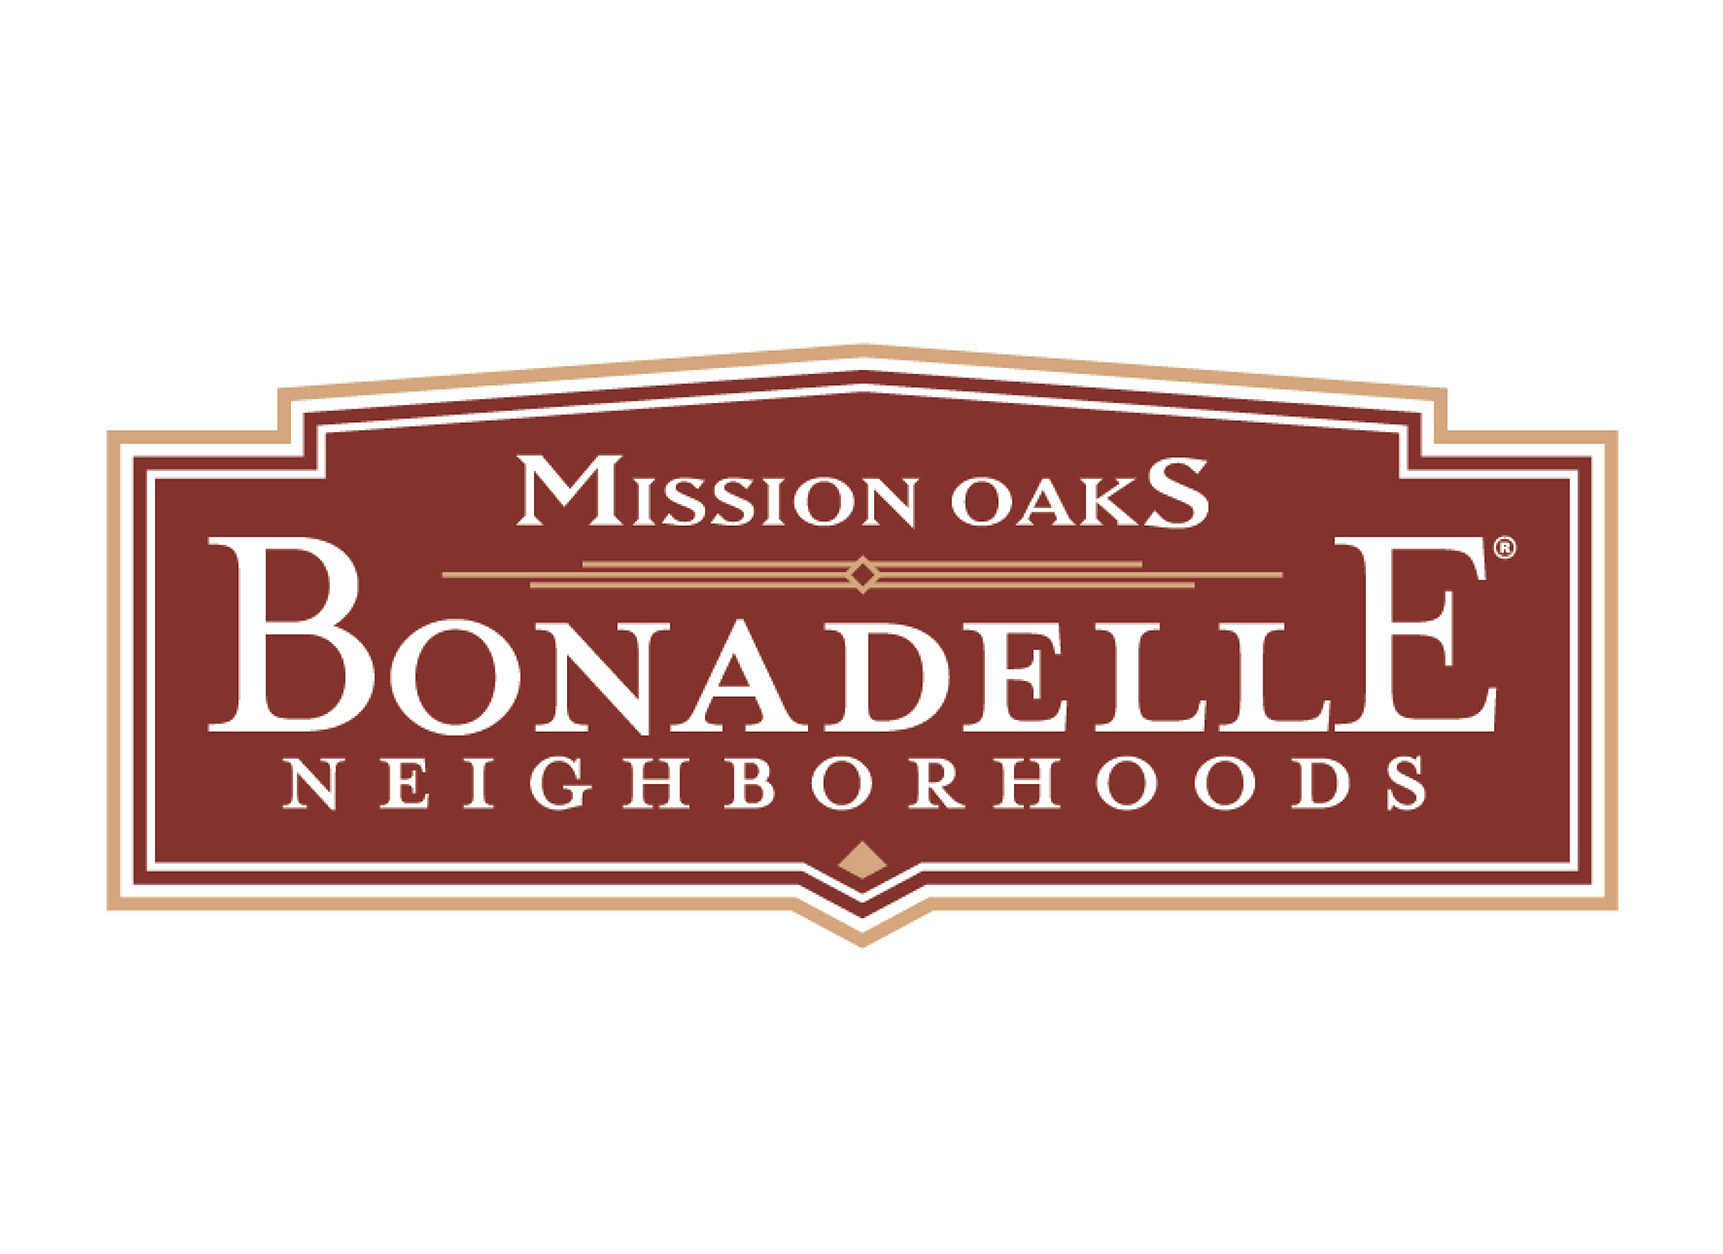 Bonadelle Neighborhoods Mission Oaks